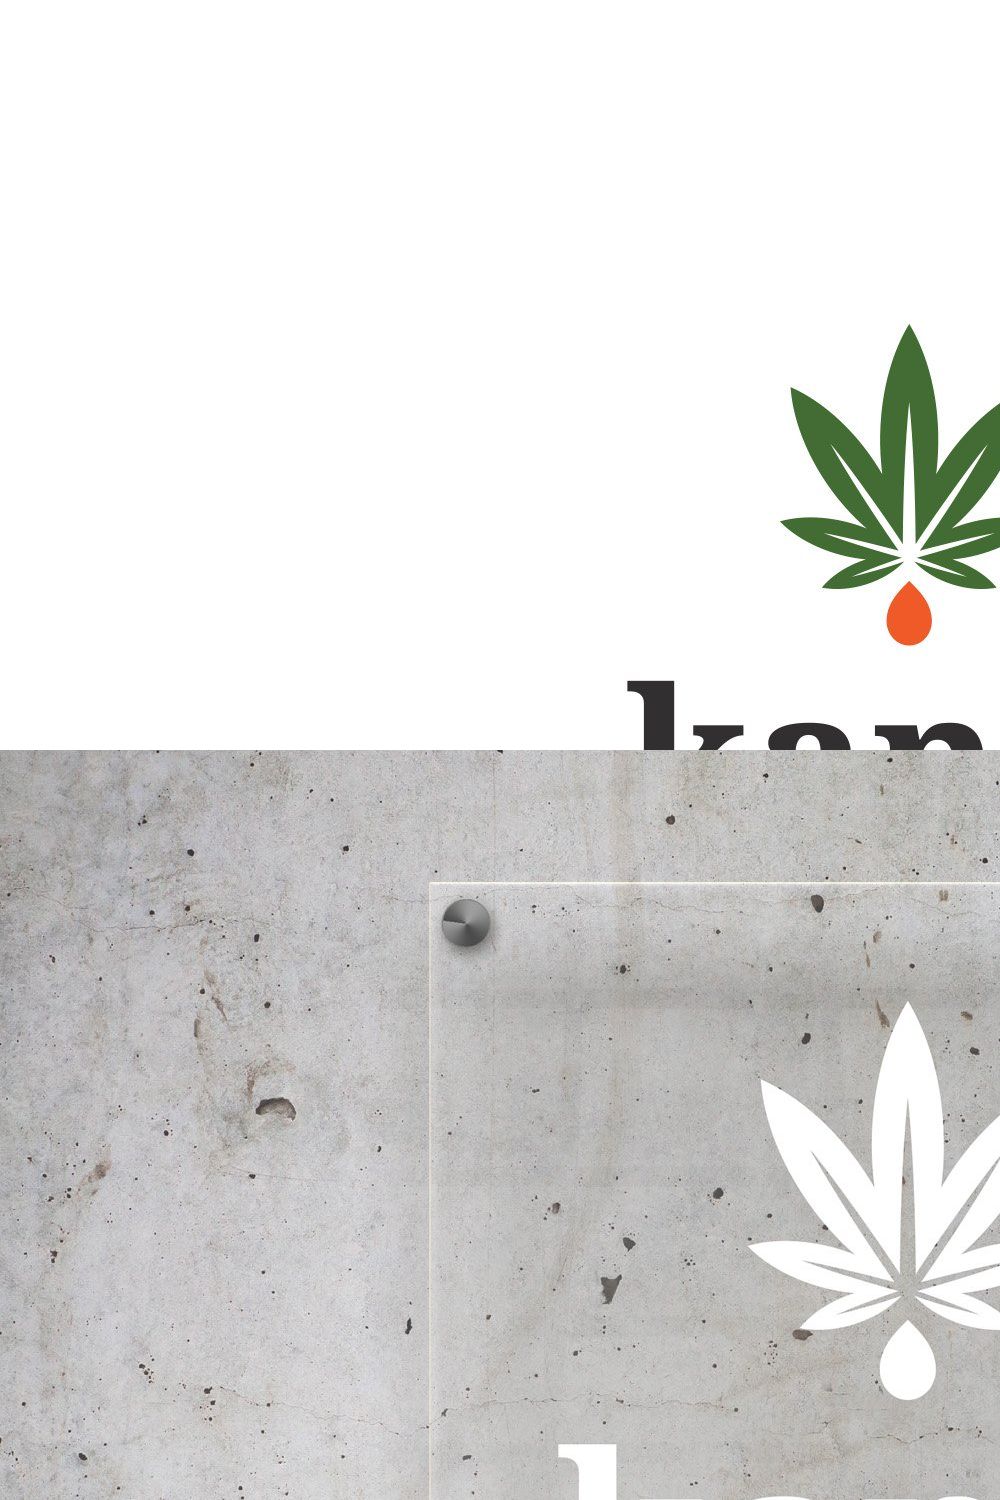 Kanol Cannabis Hemp Marijuana Logo pinterest preview image.